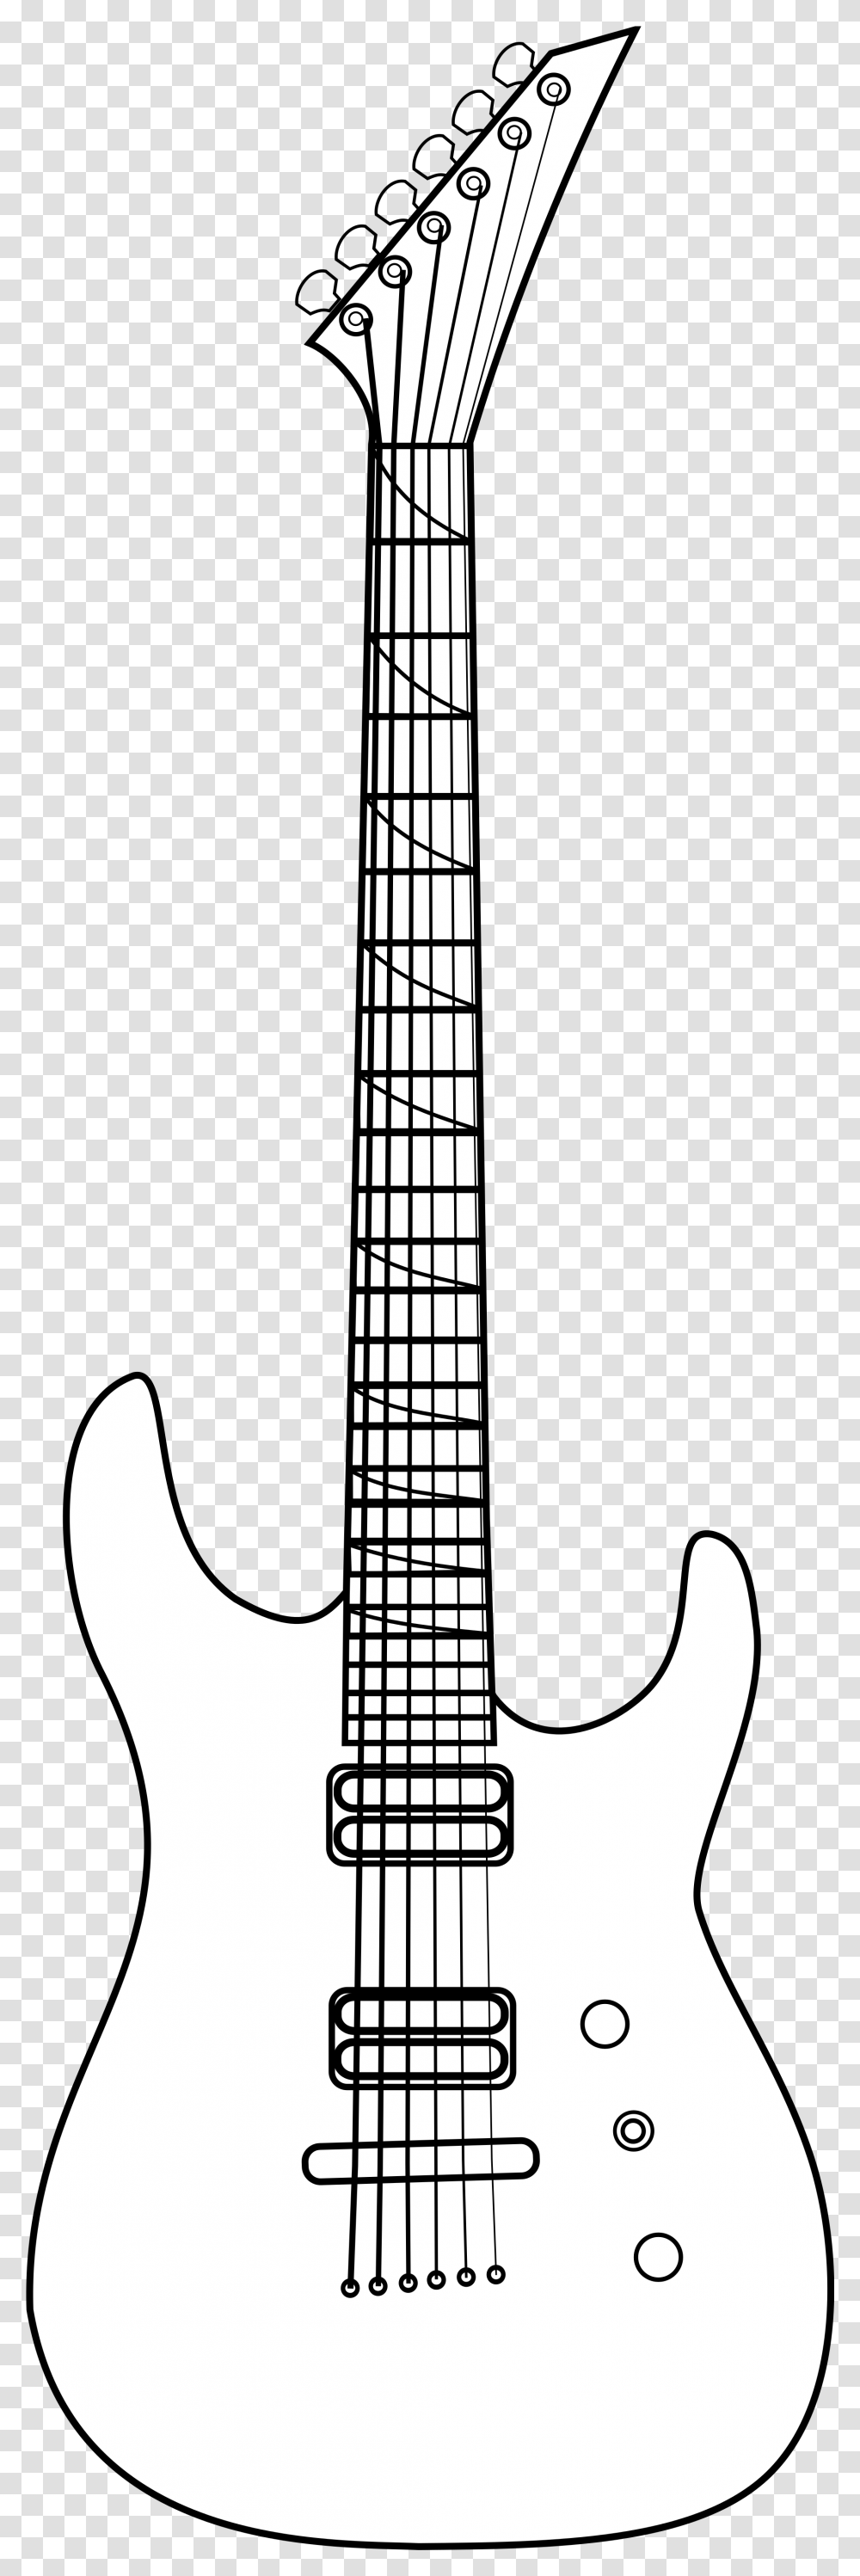 Guitar Outline Draw A Bass Guitar, Leisure Activities, Musical Instrument, Electric Guitar Transparent Png